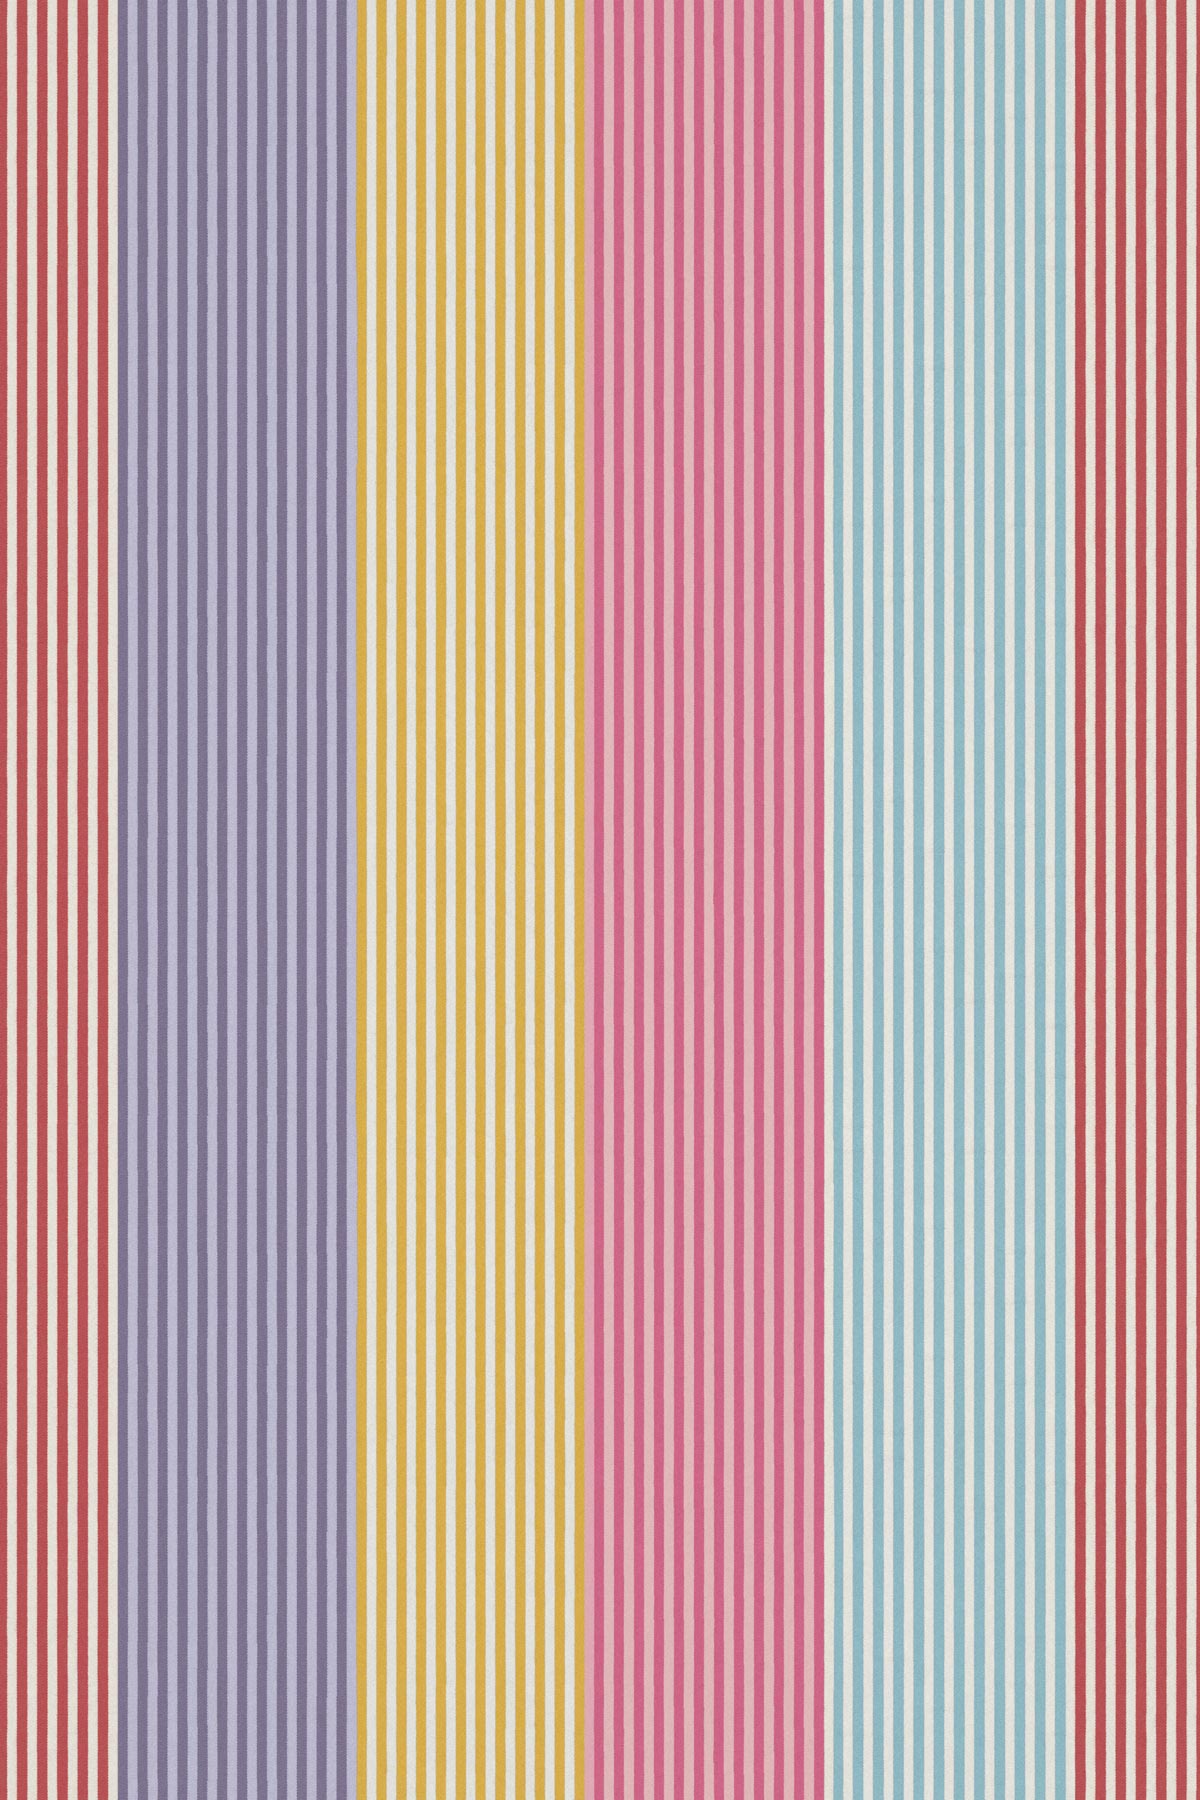 Funfair Stripe Fabric - Grape / Cherry / Pineapple / Blossom - by Harlequin